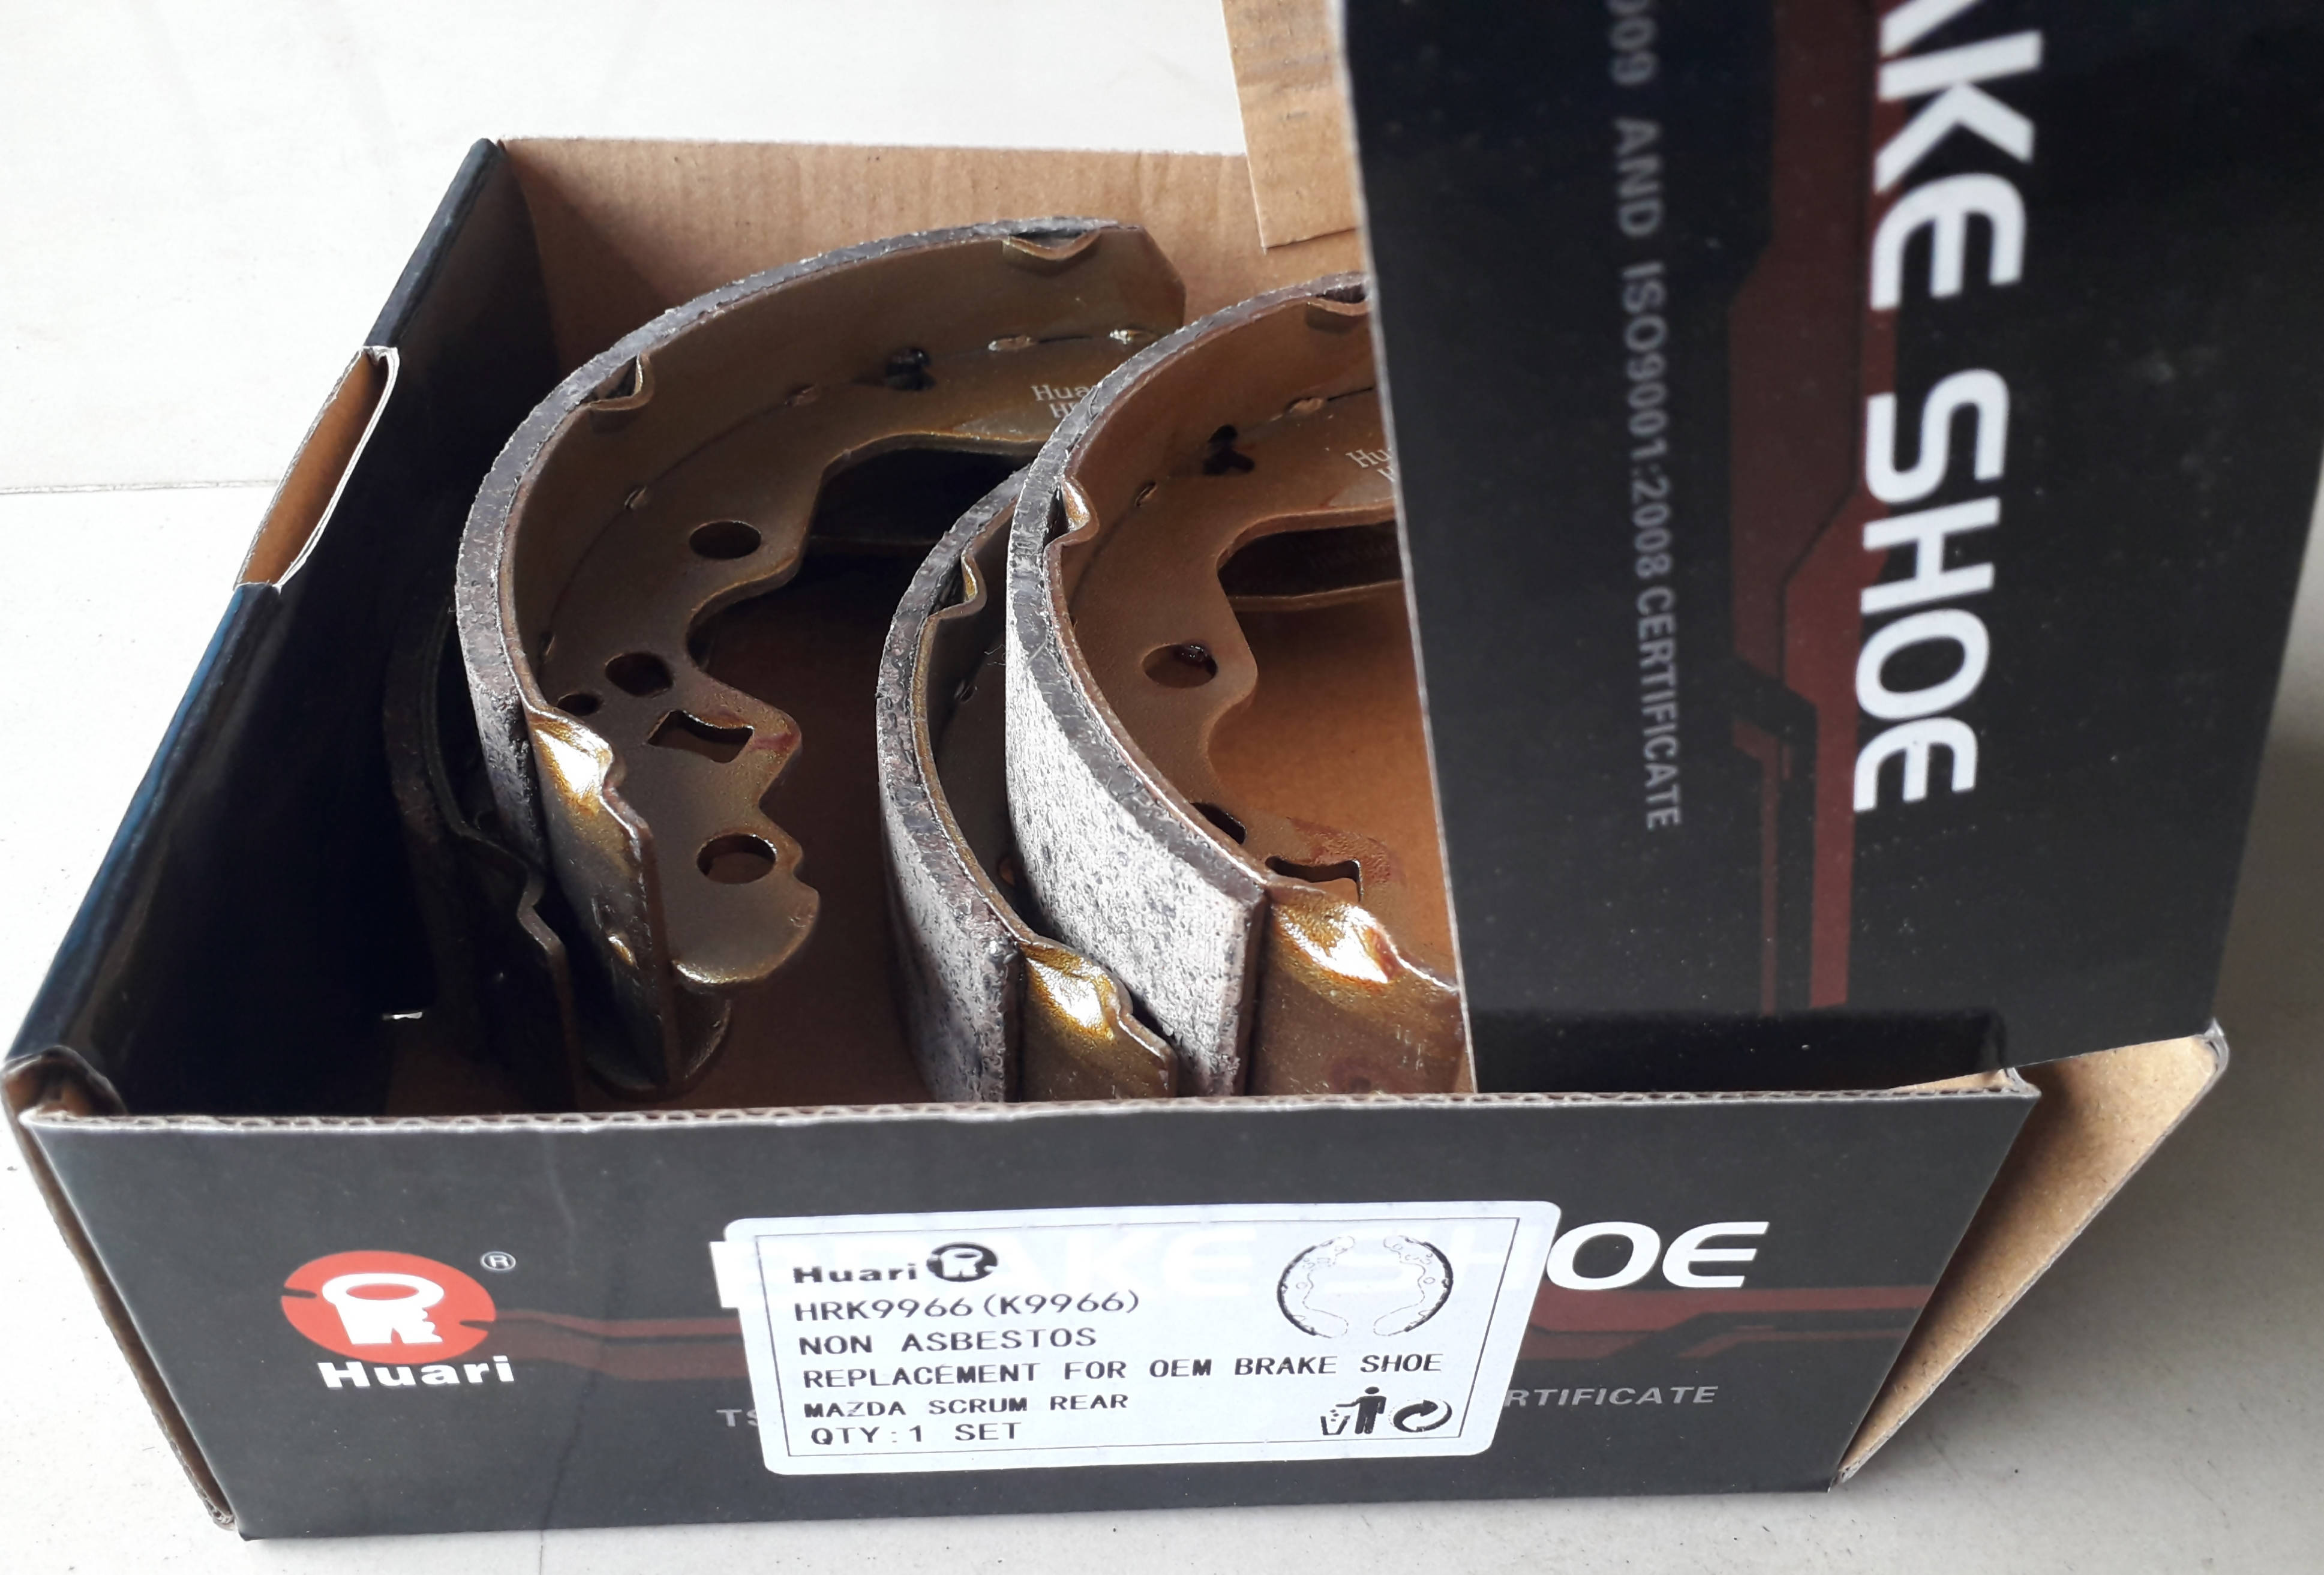 Brake Shoe, HUARI, K9966 (007807)